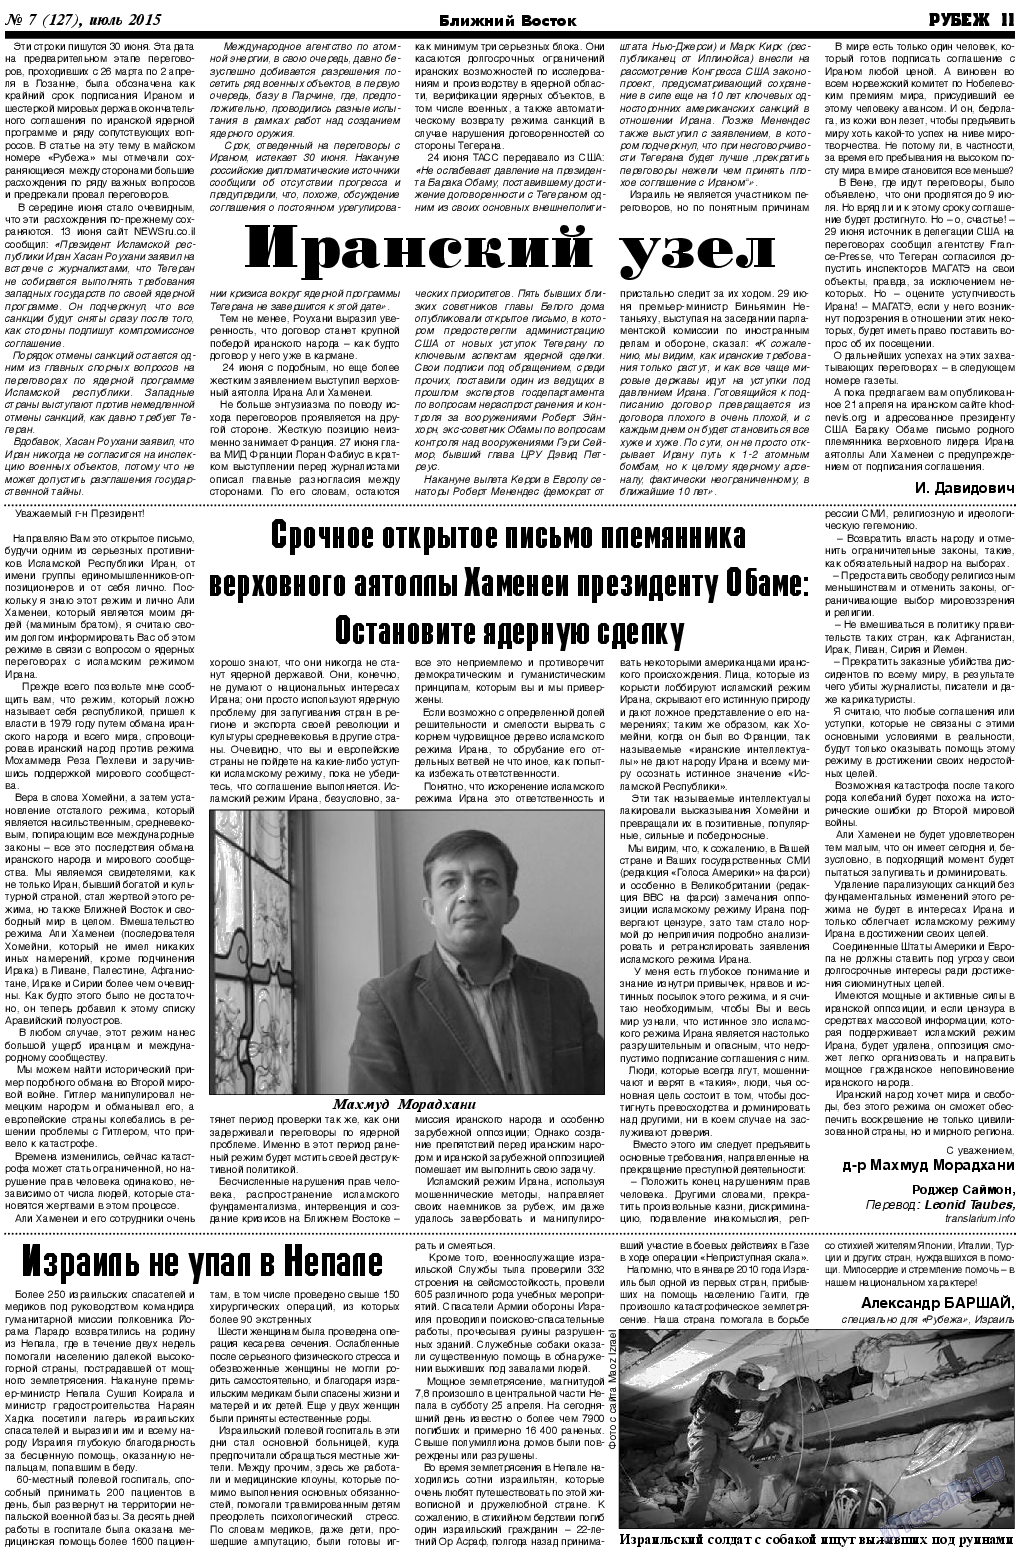 Рубеж, газета. 2015 №7 стр.11